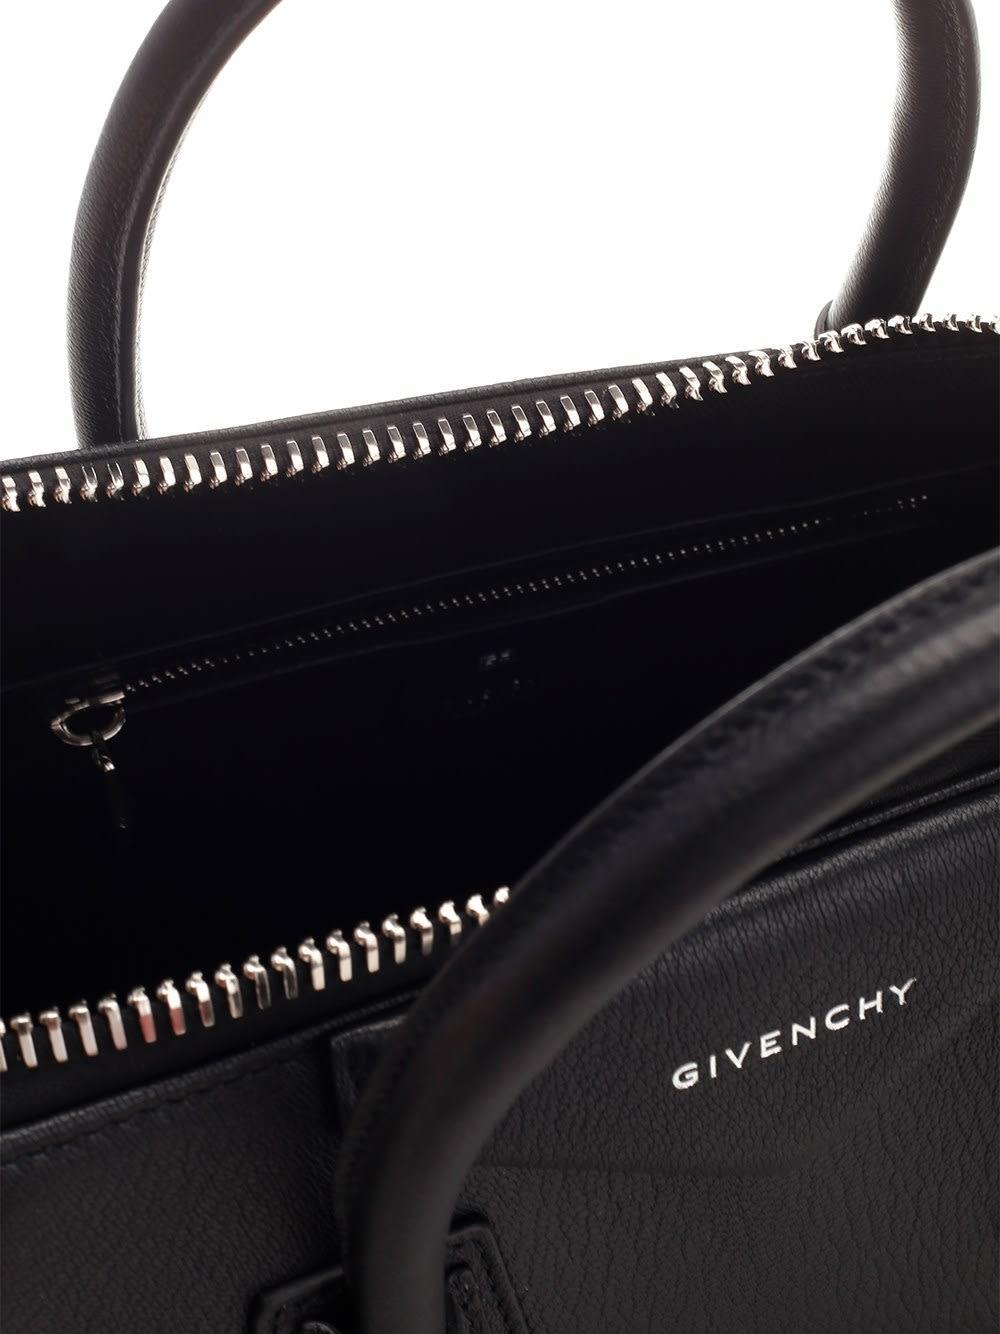 Givenchy Antigona Handbag in Black